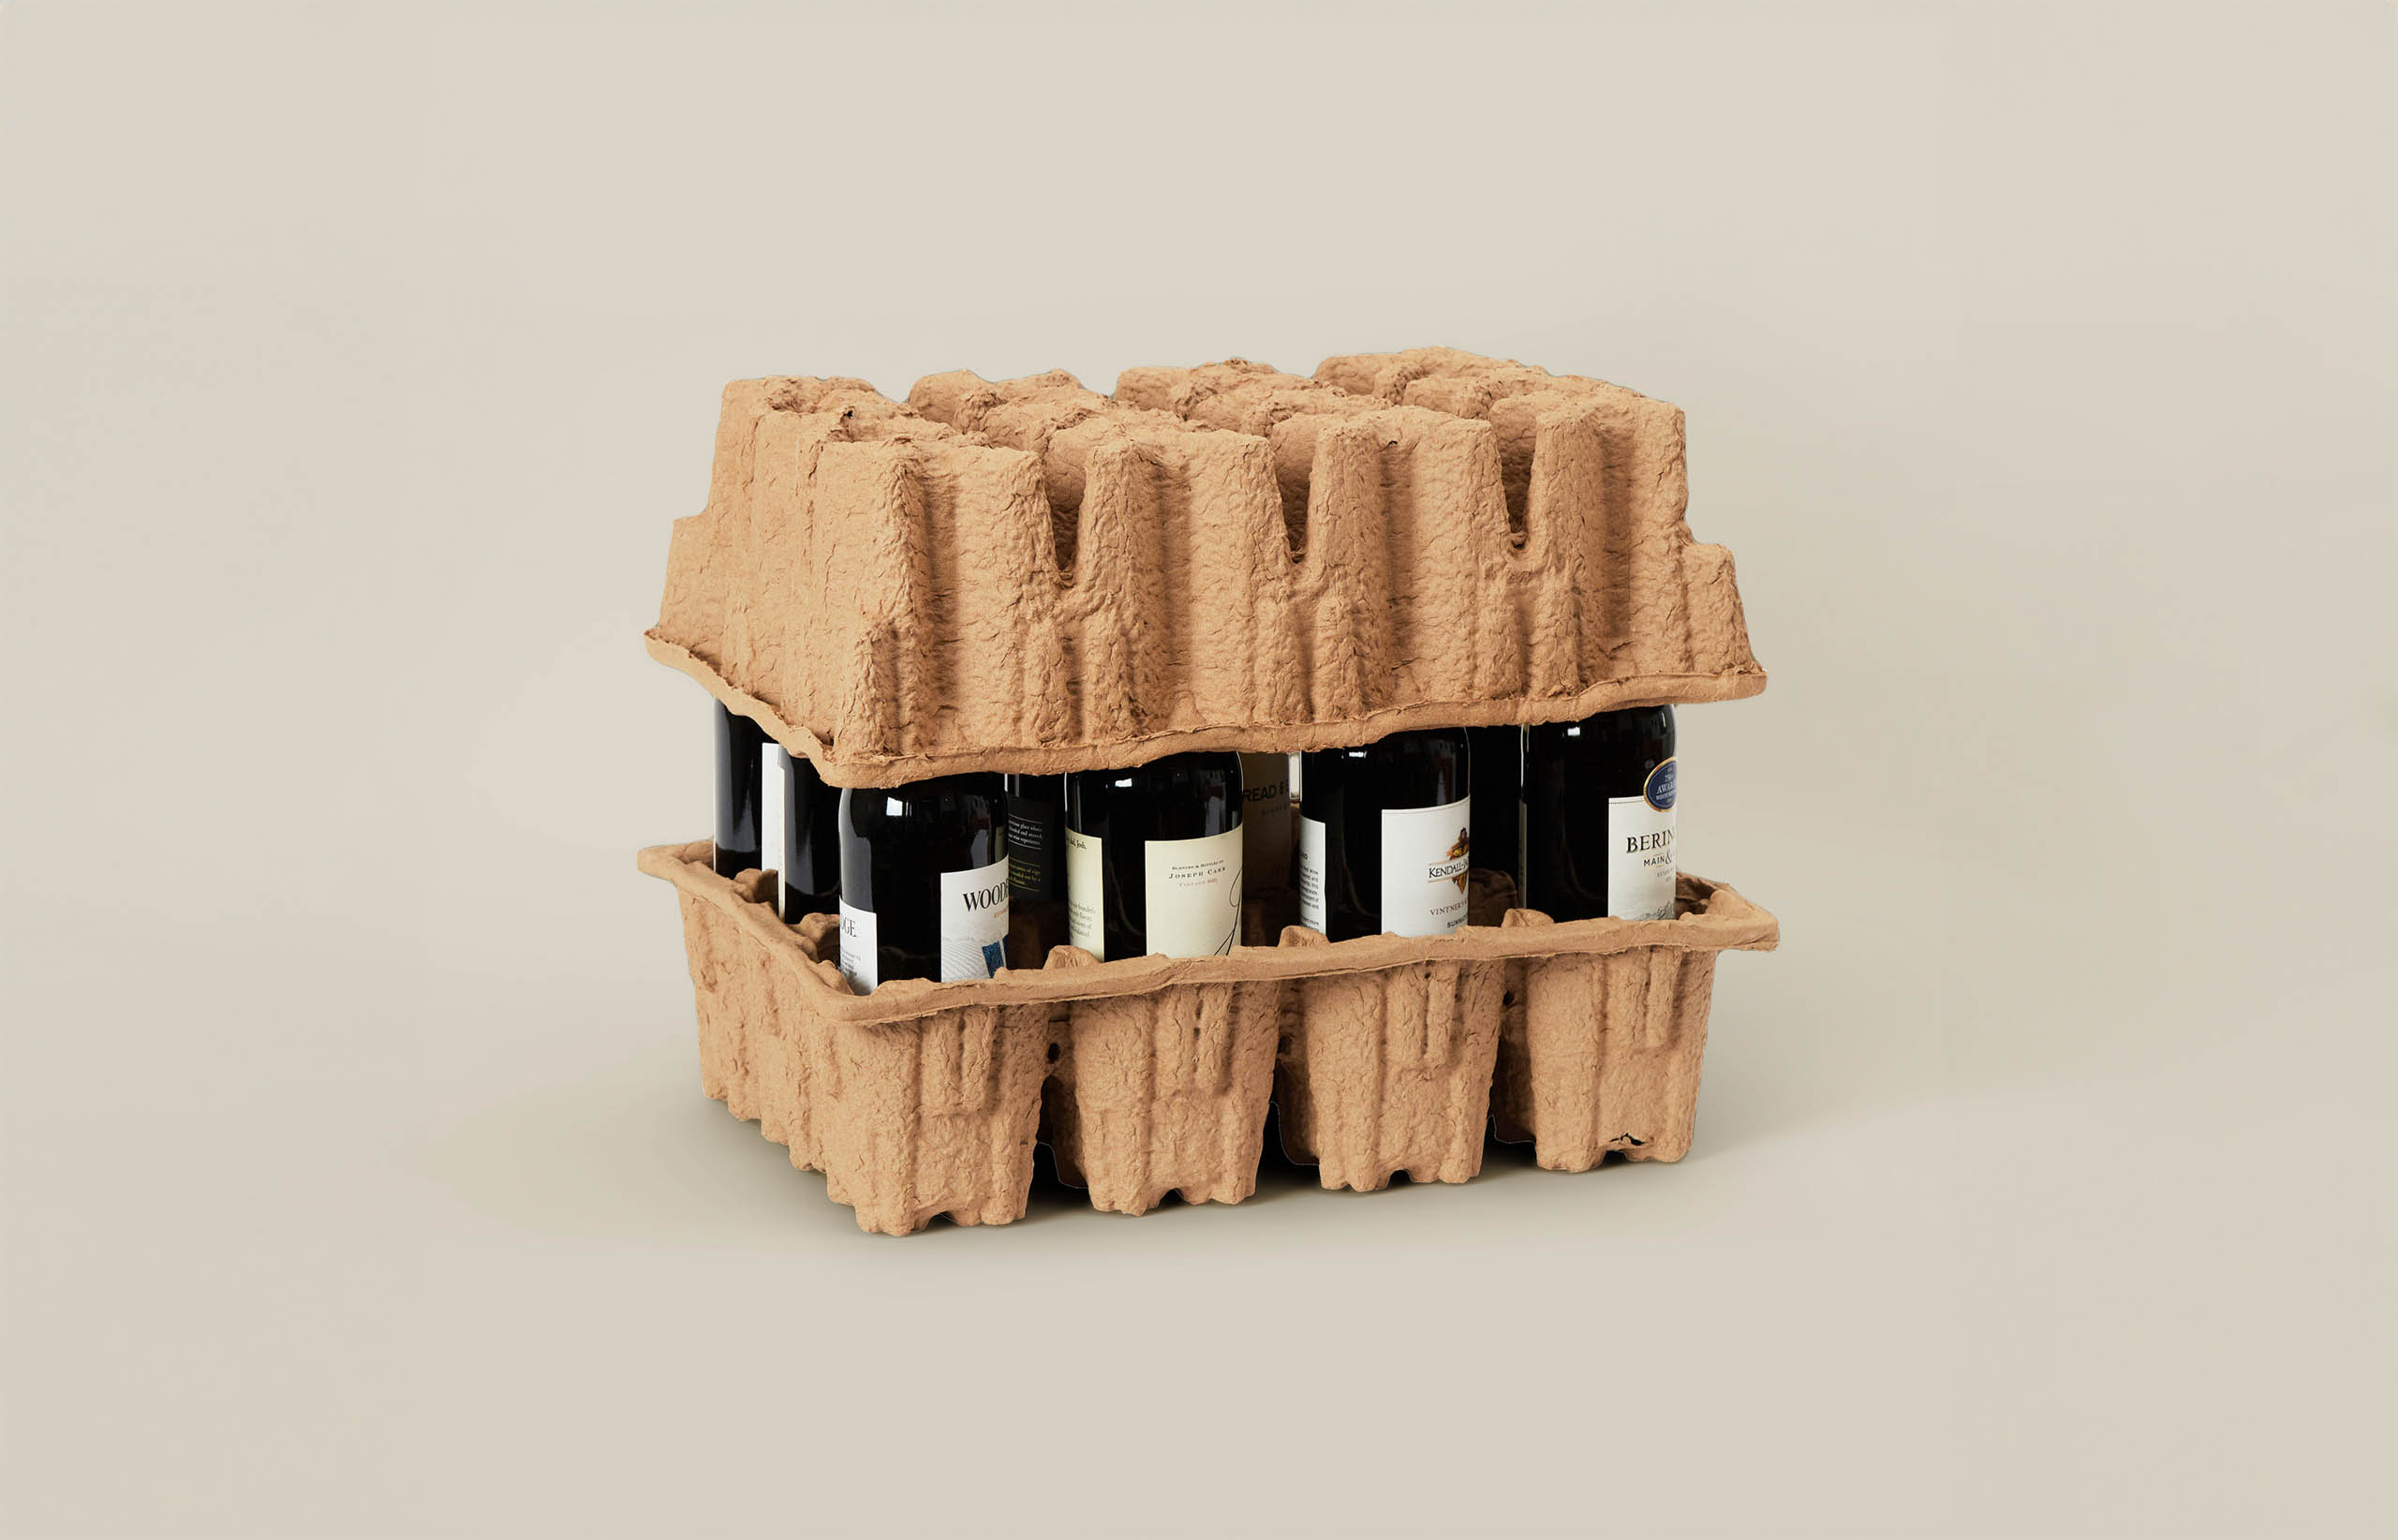 Wine bottles in molded pulp packaging.